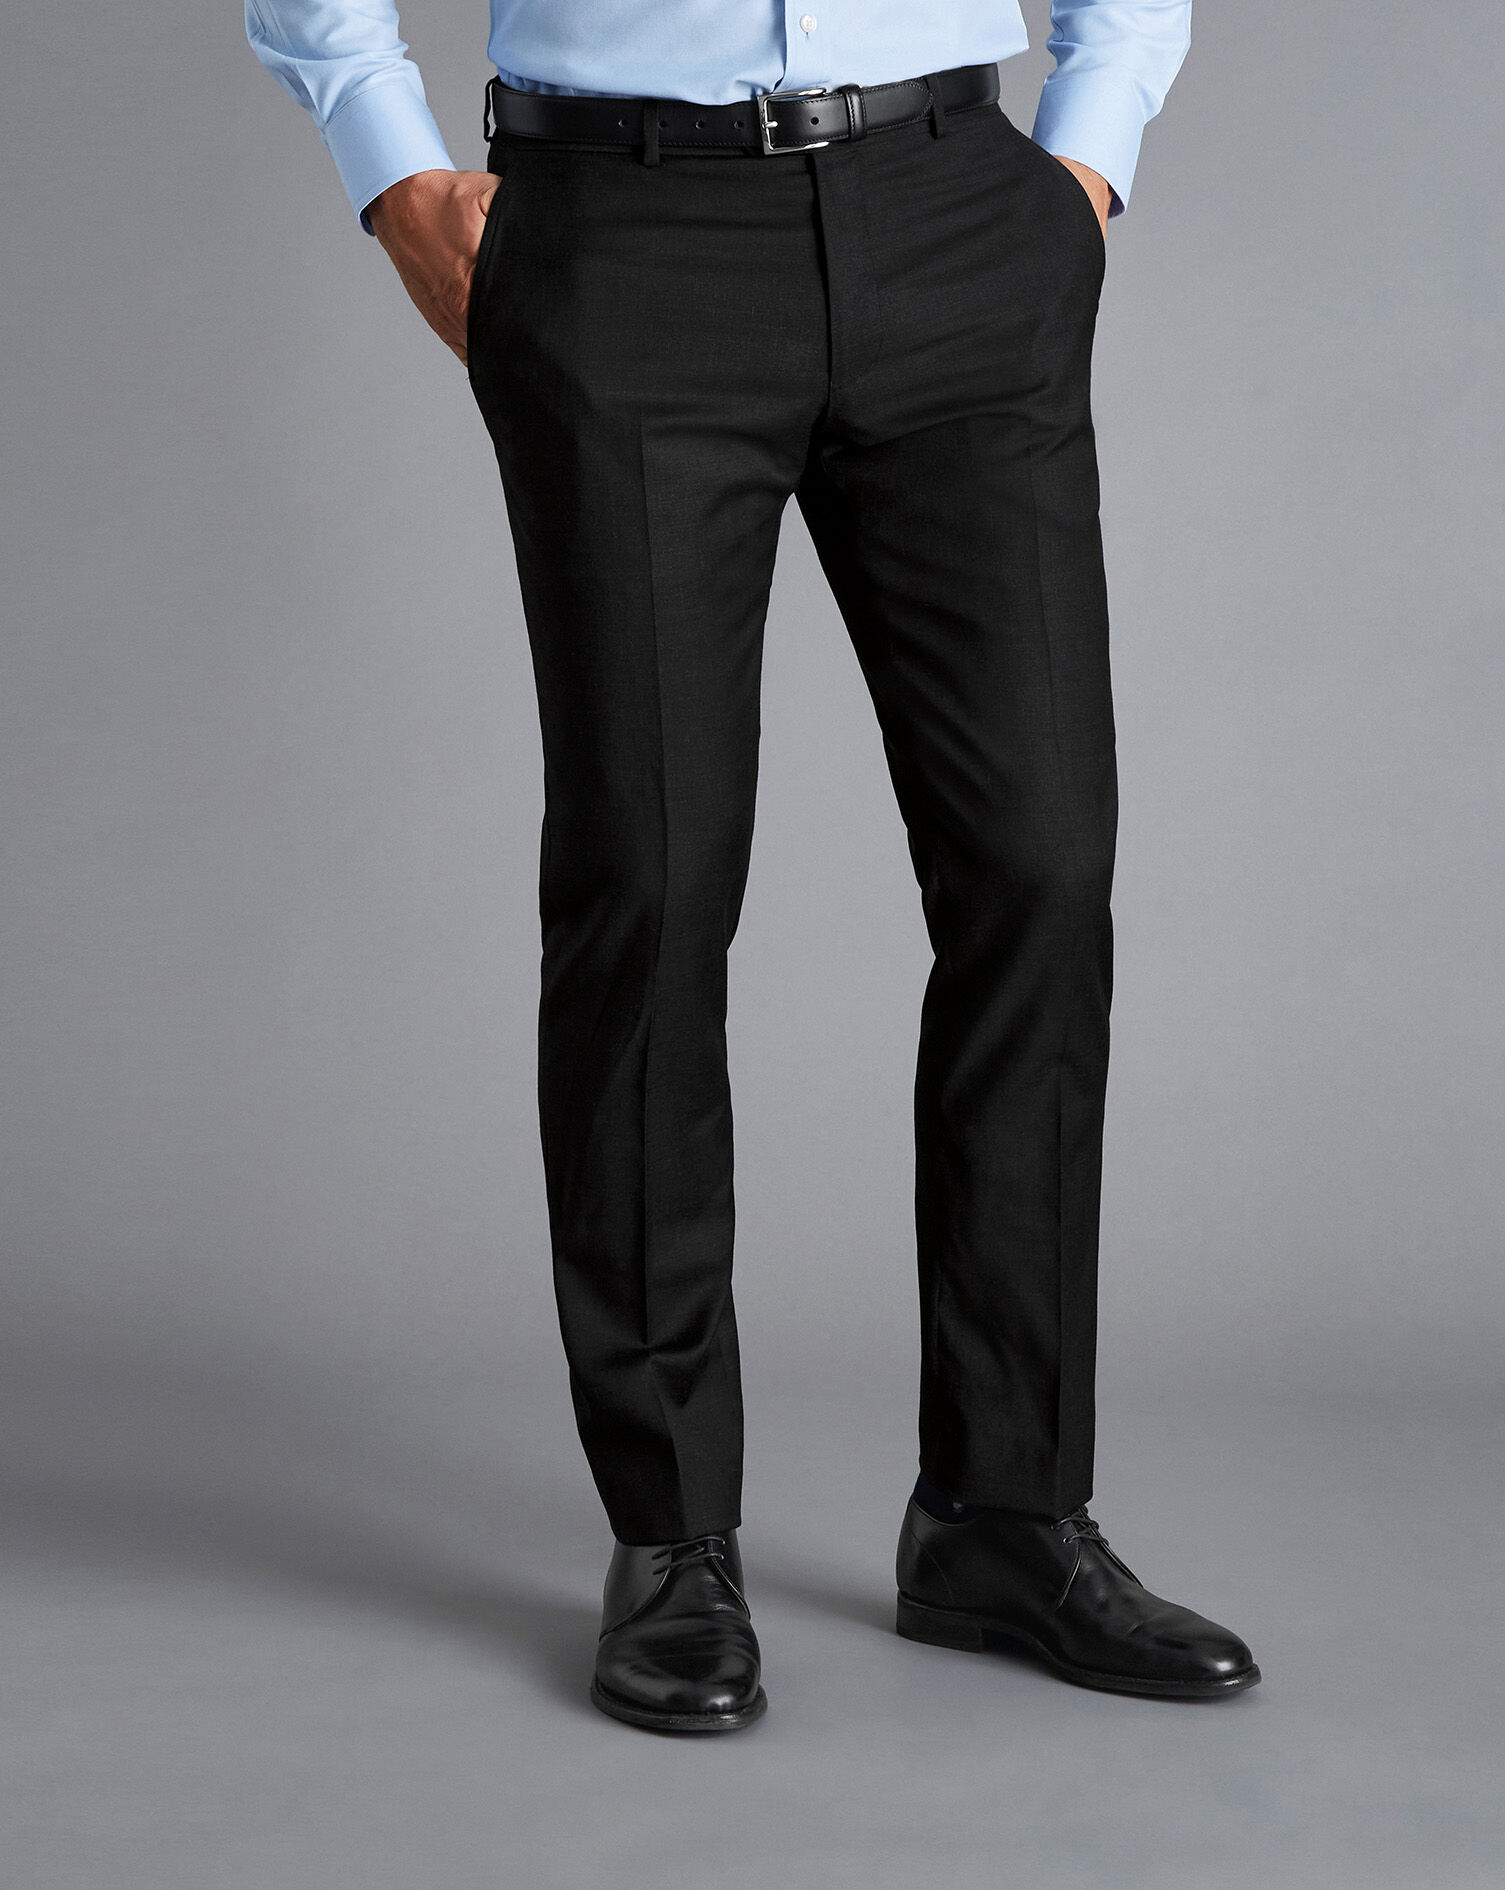 Men's Suits & Tuxedos | J.Crew